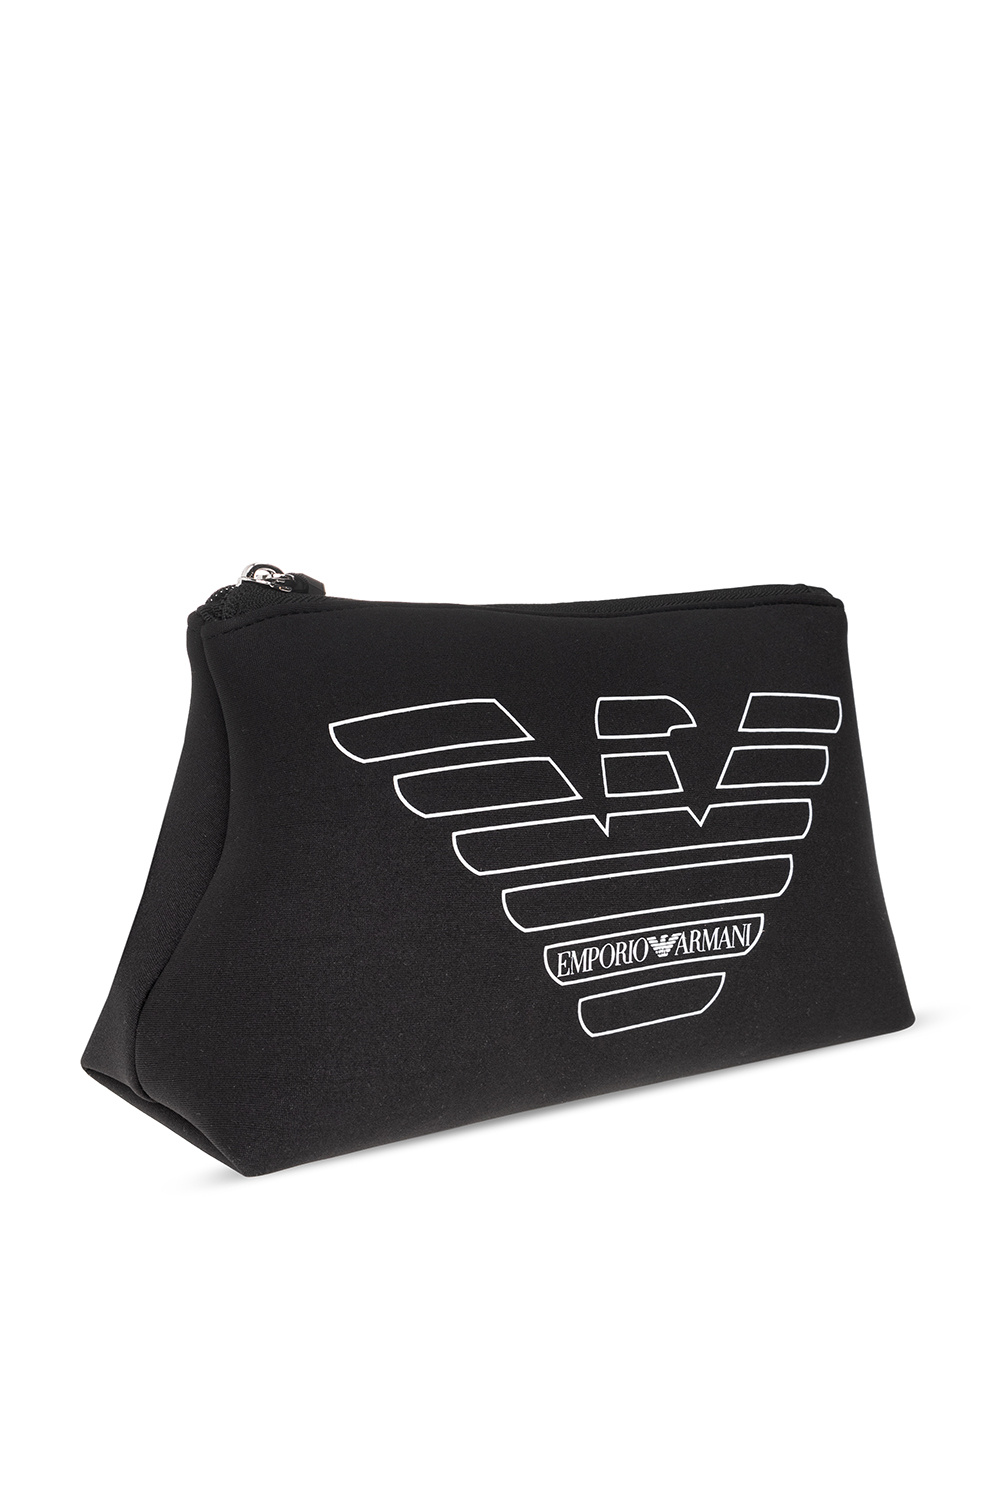 Emporio single-breasted armani Wash bag with logo